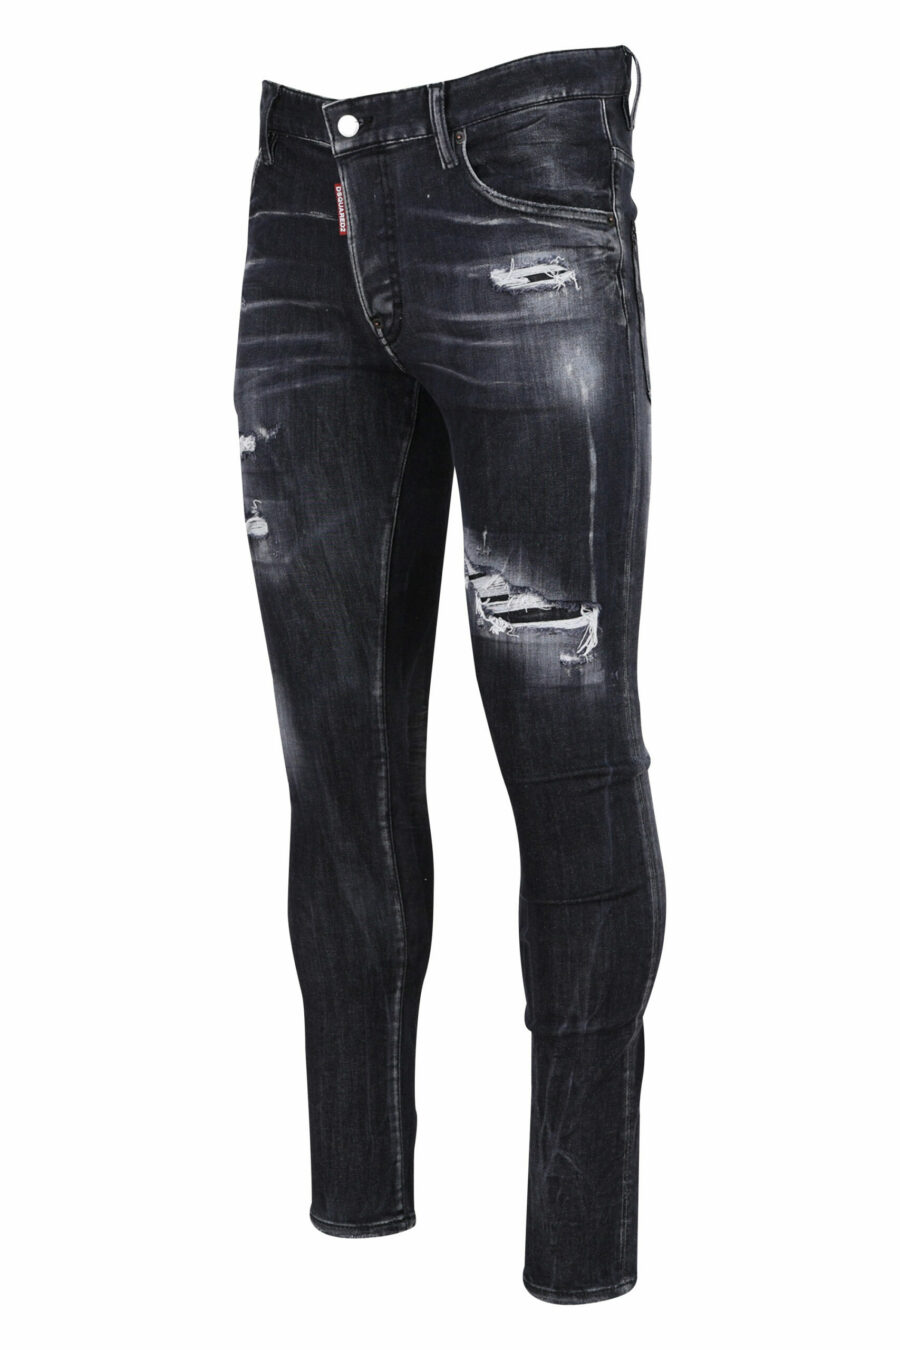 Super twinkey jeans black semi-worn and ripped - 8054148103088 1 scaled